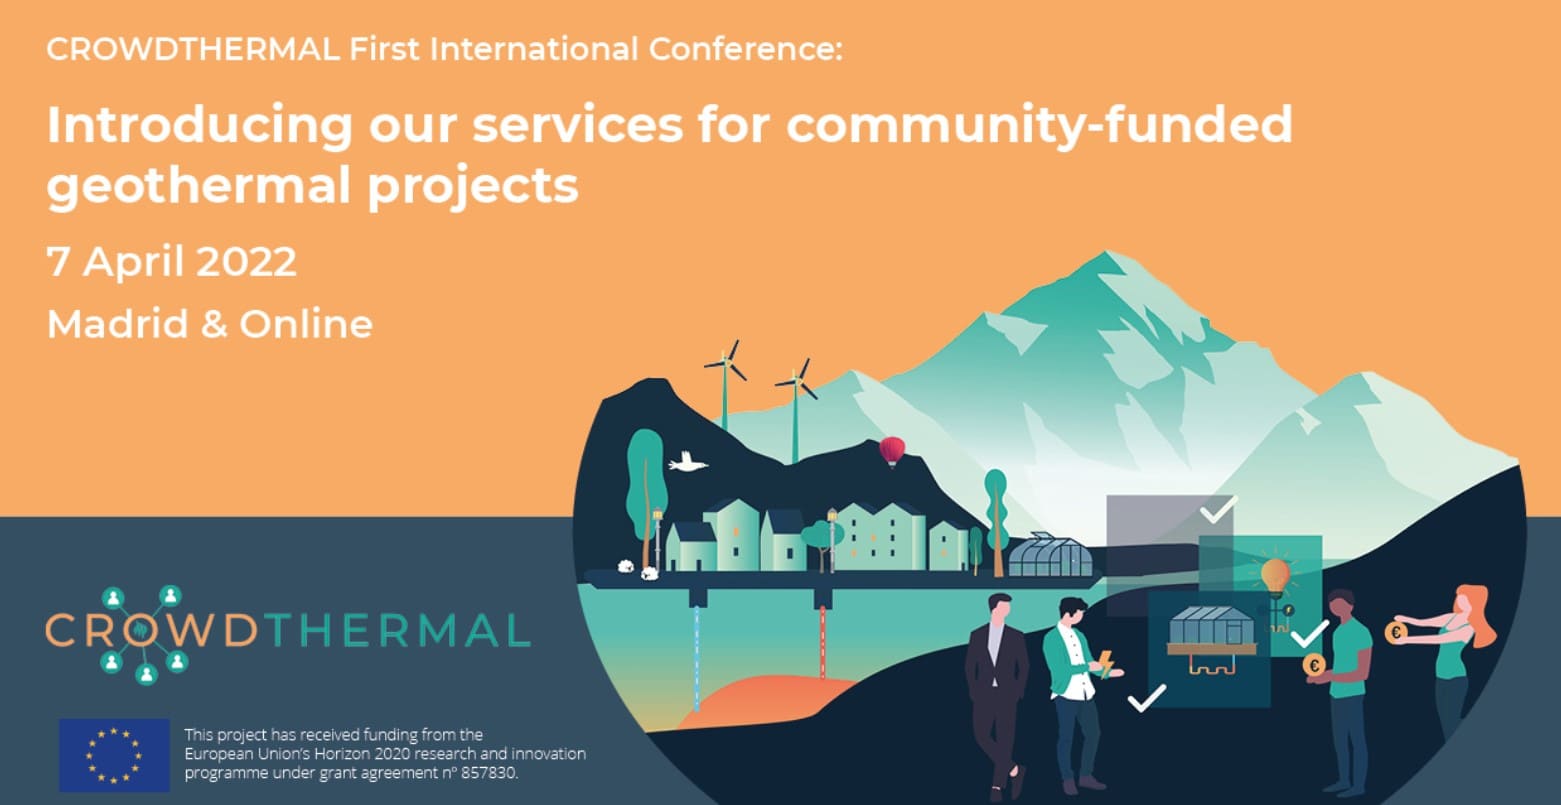 CrowdThermal International Conference_Παρουσίαση των υπηρεσιών μας για έργα feothermal που χρηματοδοτούνται από την κοινότητα - CrowdfundingHub